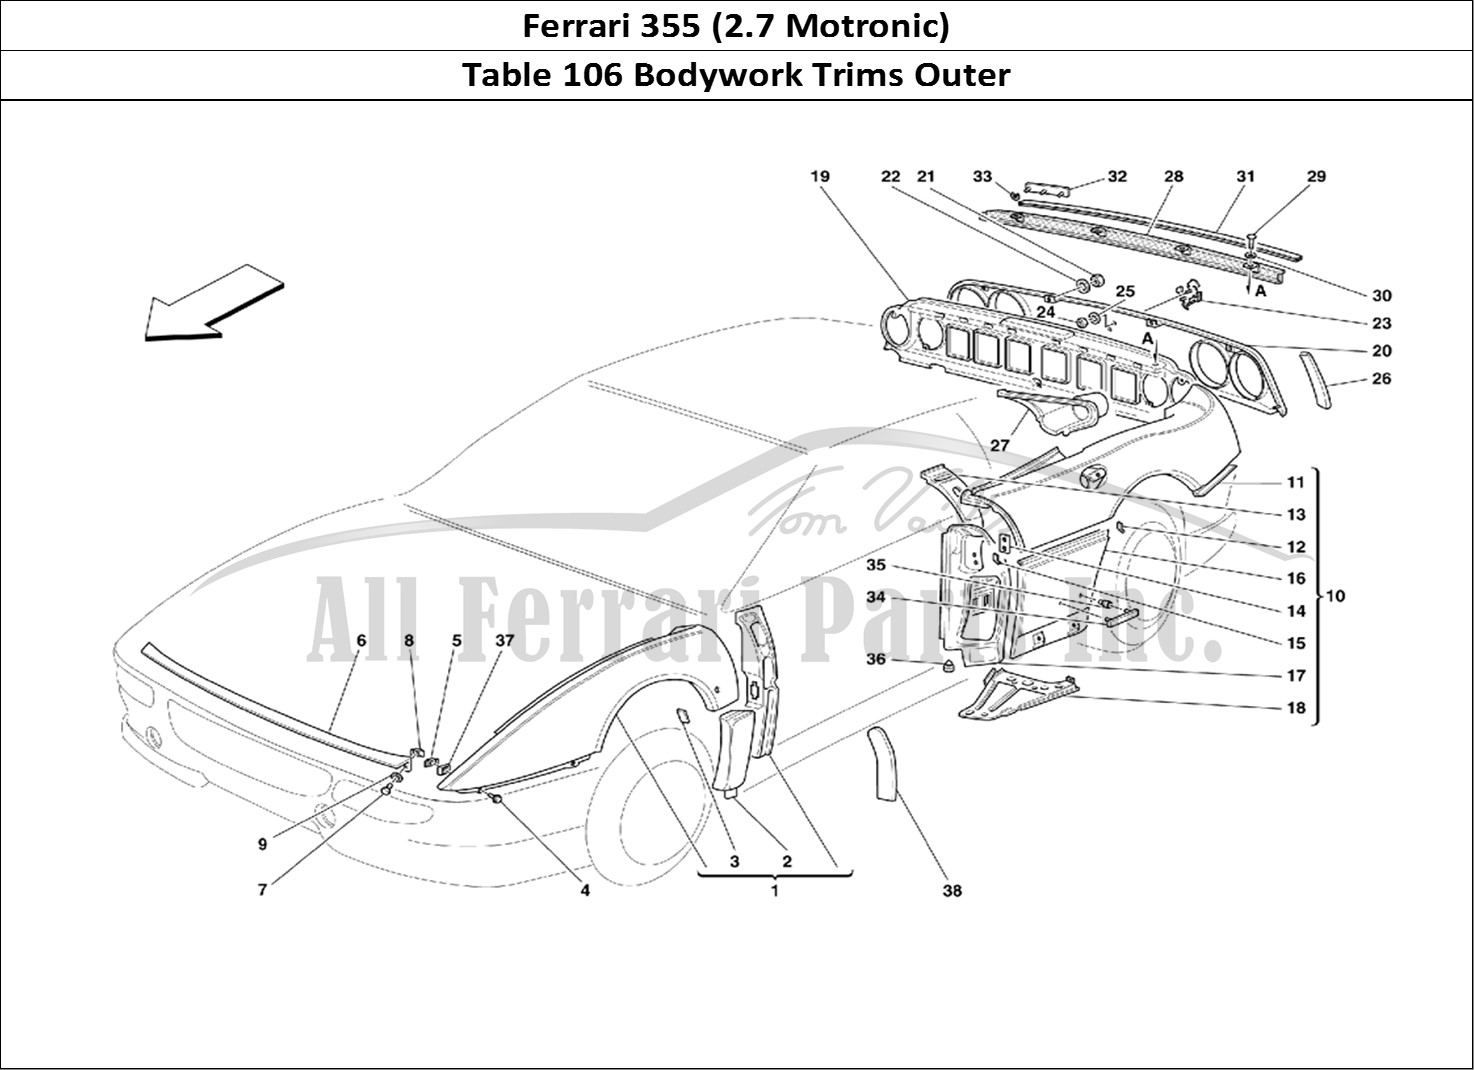 Ferrari Parts Ferrari 355 (2.7 Motronic) Page 106 Body - Outer Trims